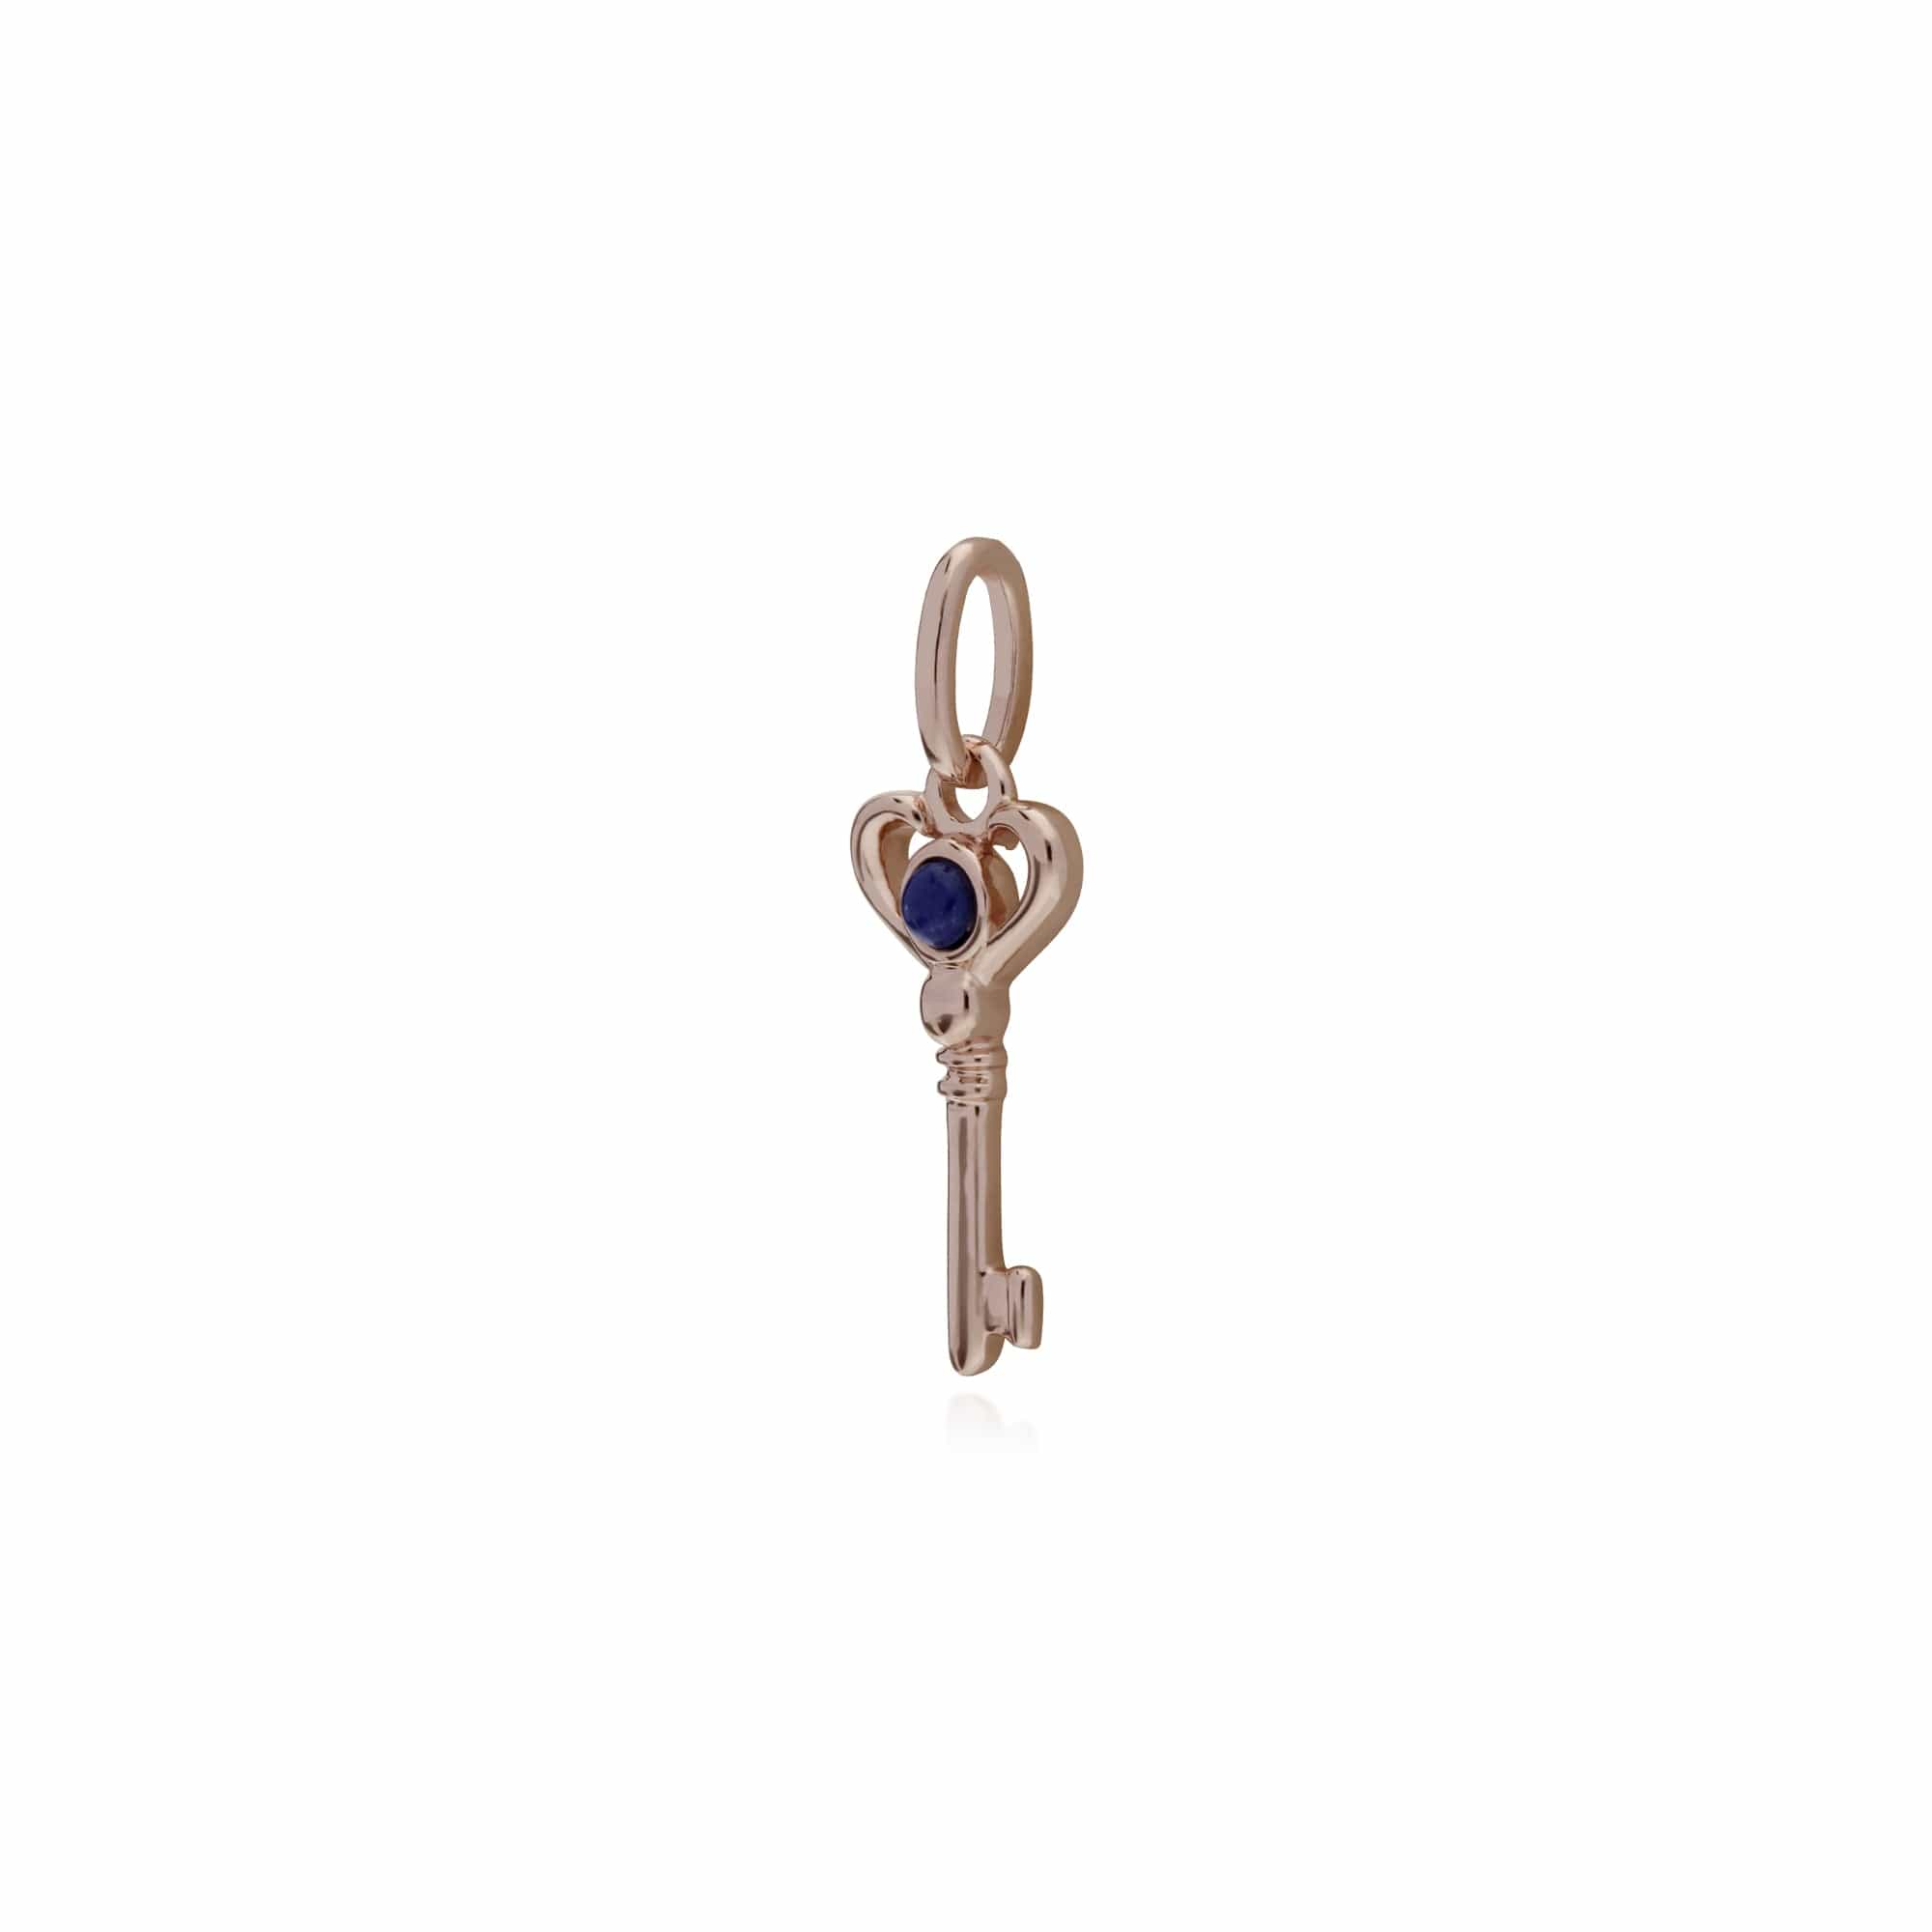 Gemondo Rose Gold Plated Sterling Silver Lapis Lazuli Small Key Charm - Gemondo